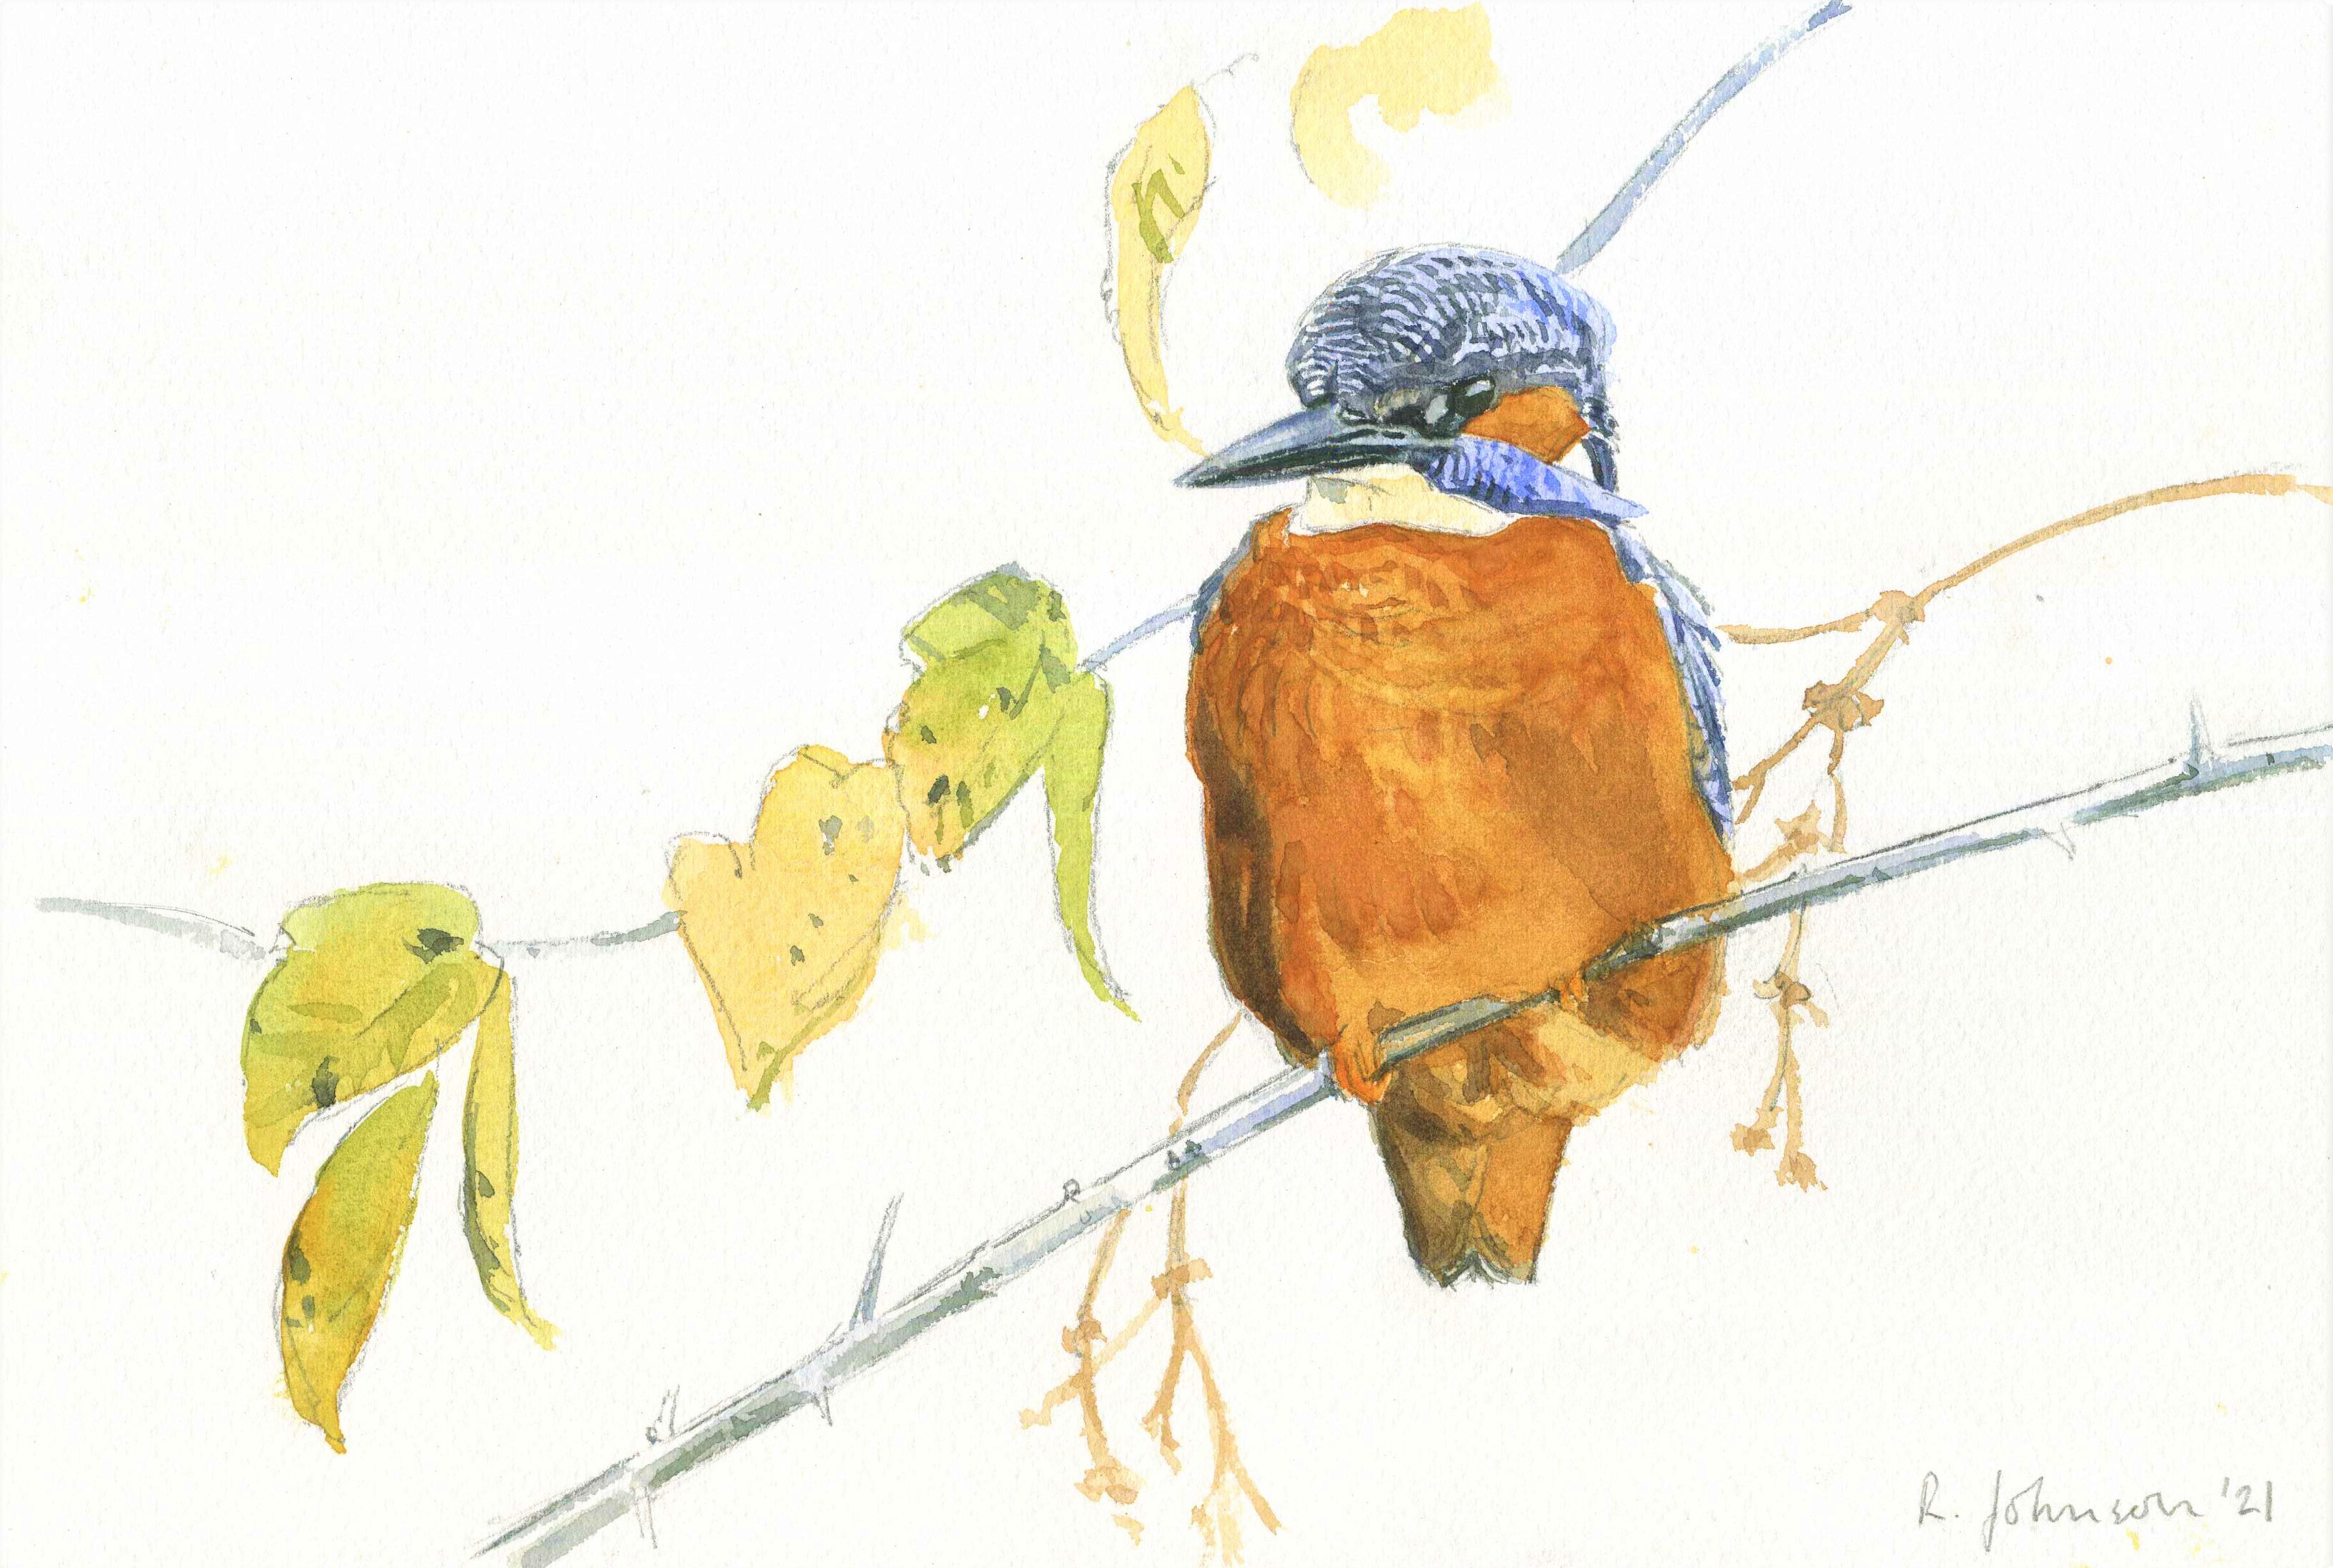 <p>Kingfisher by Richard Johnson</p>